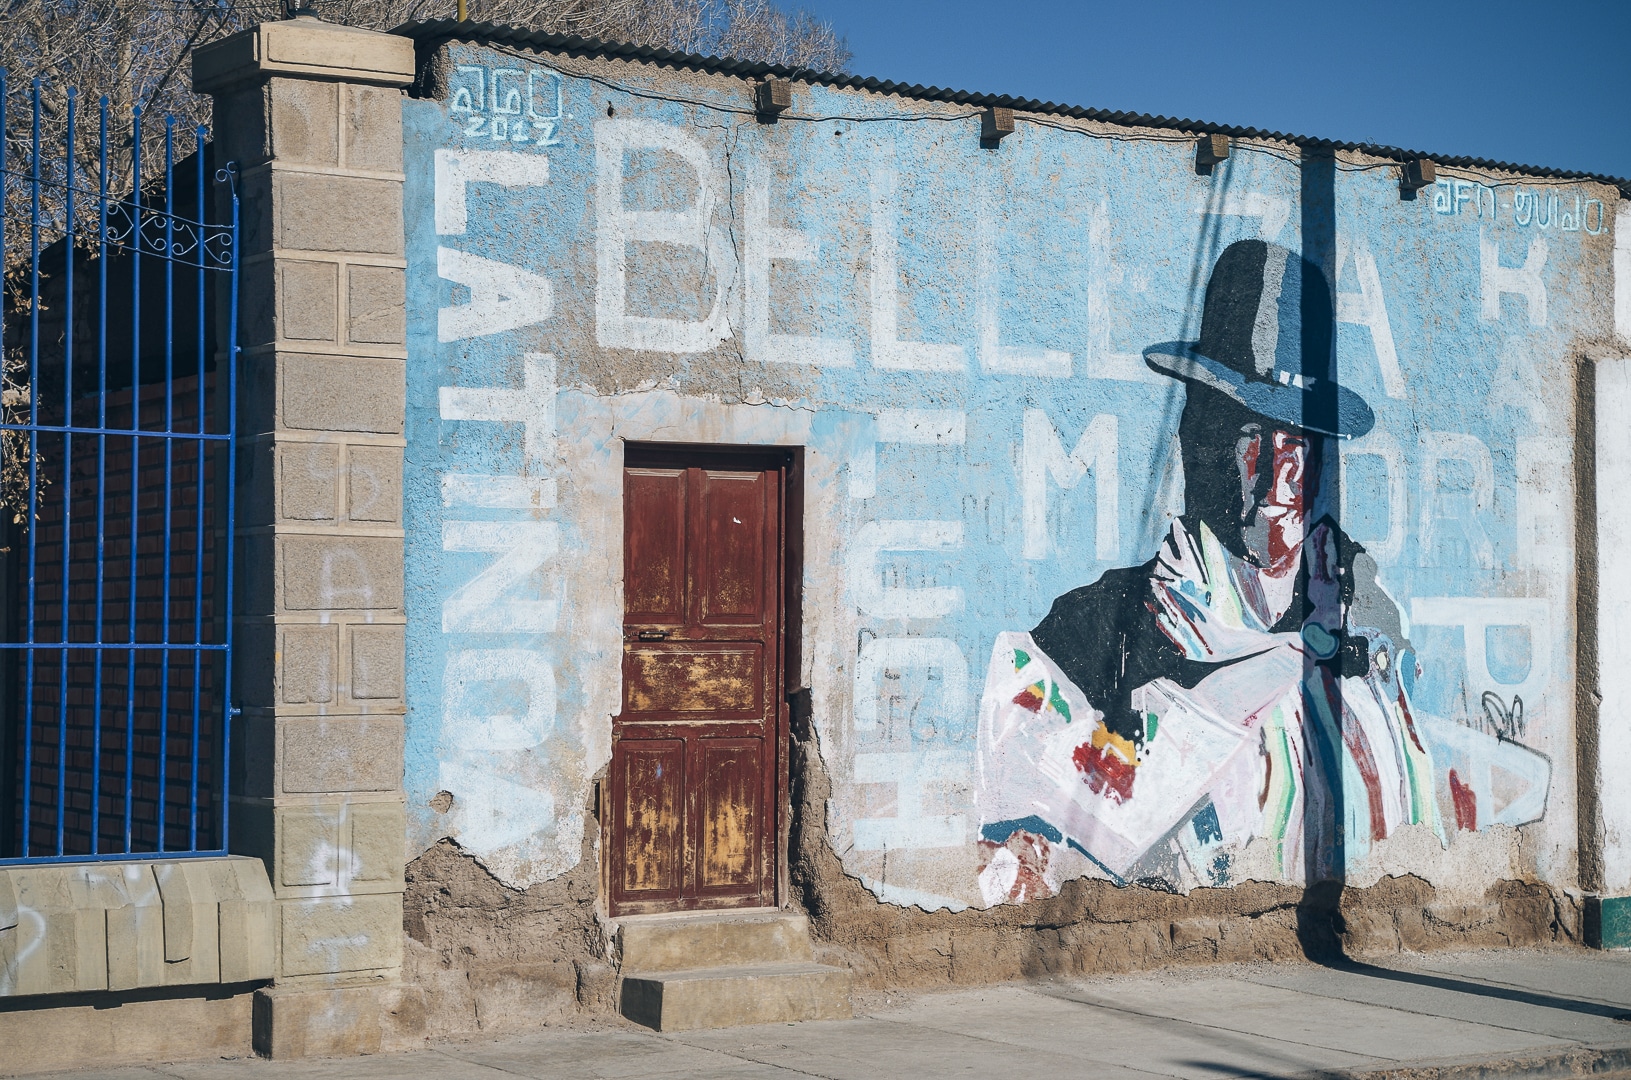 graffiti représentant une Cholita street art en Bolivie cholitas luchadoras